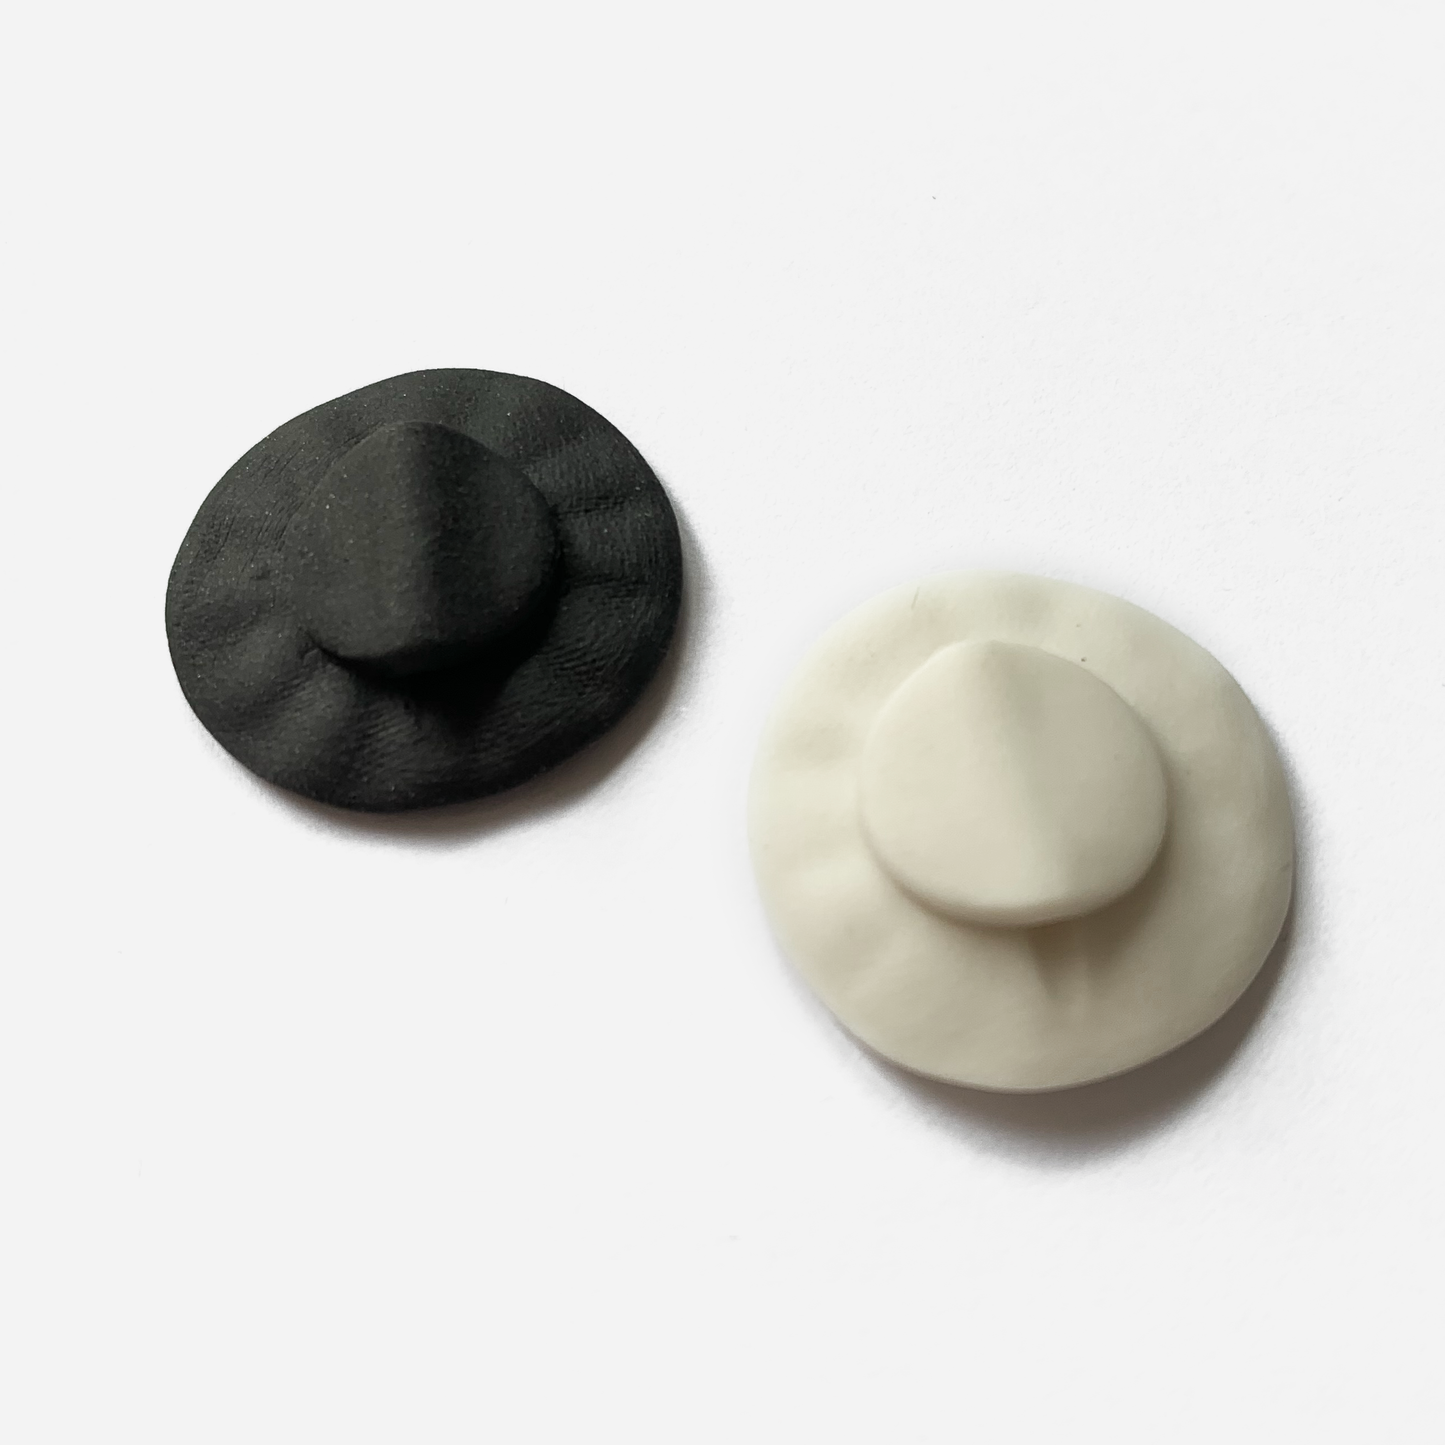 Coal & Gold - Porcelain Bling Buttons